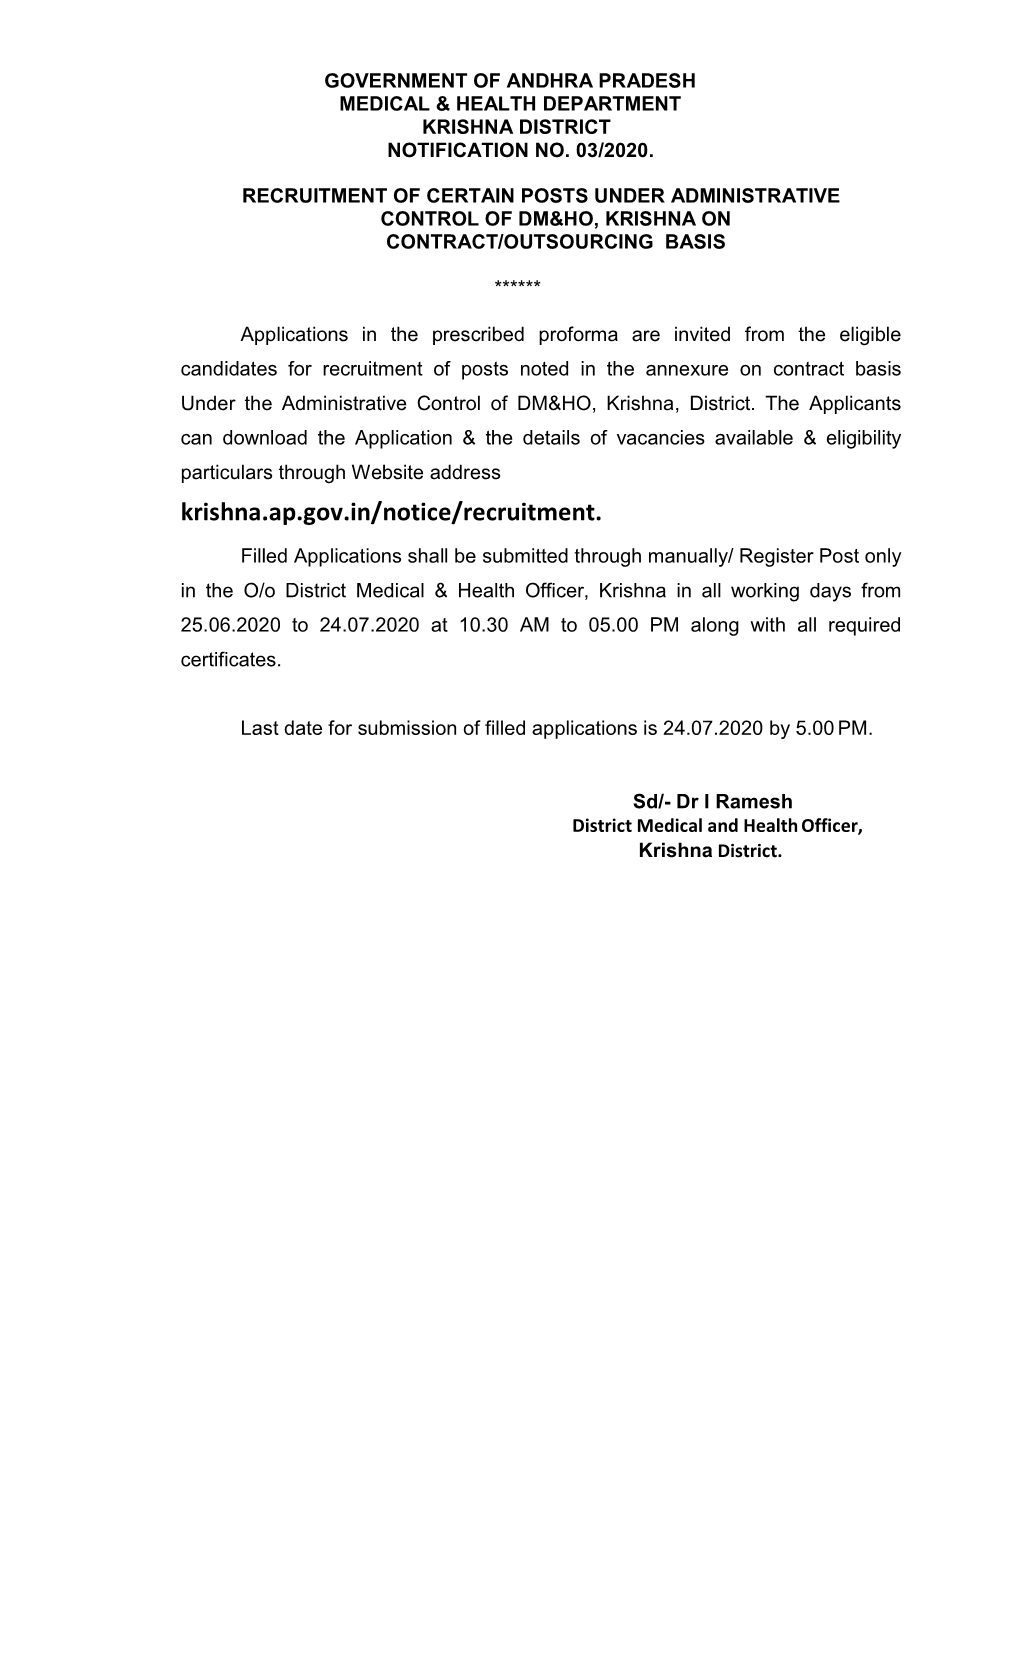 Krishna District Notification No